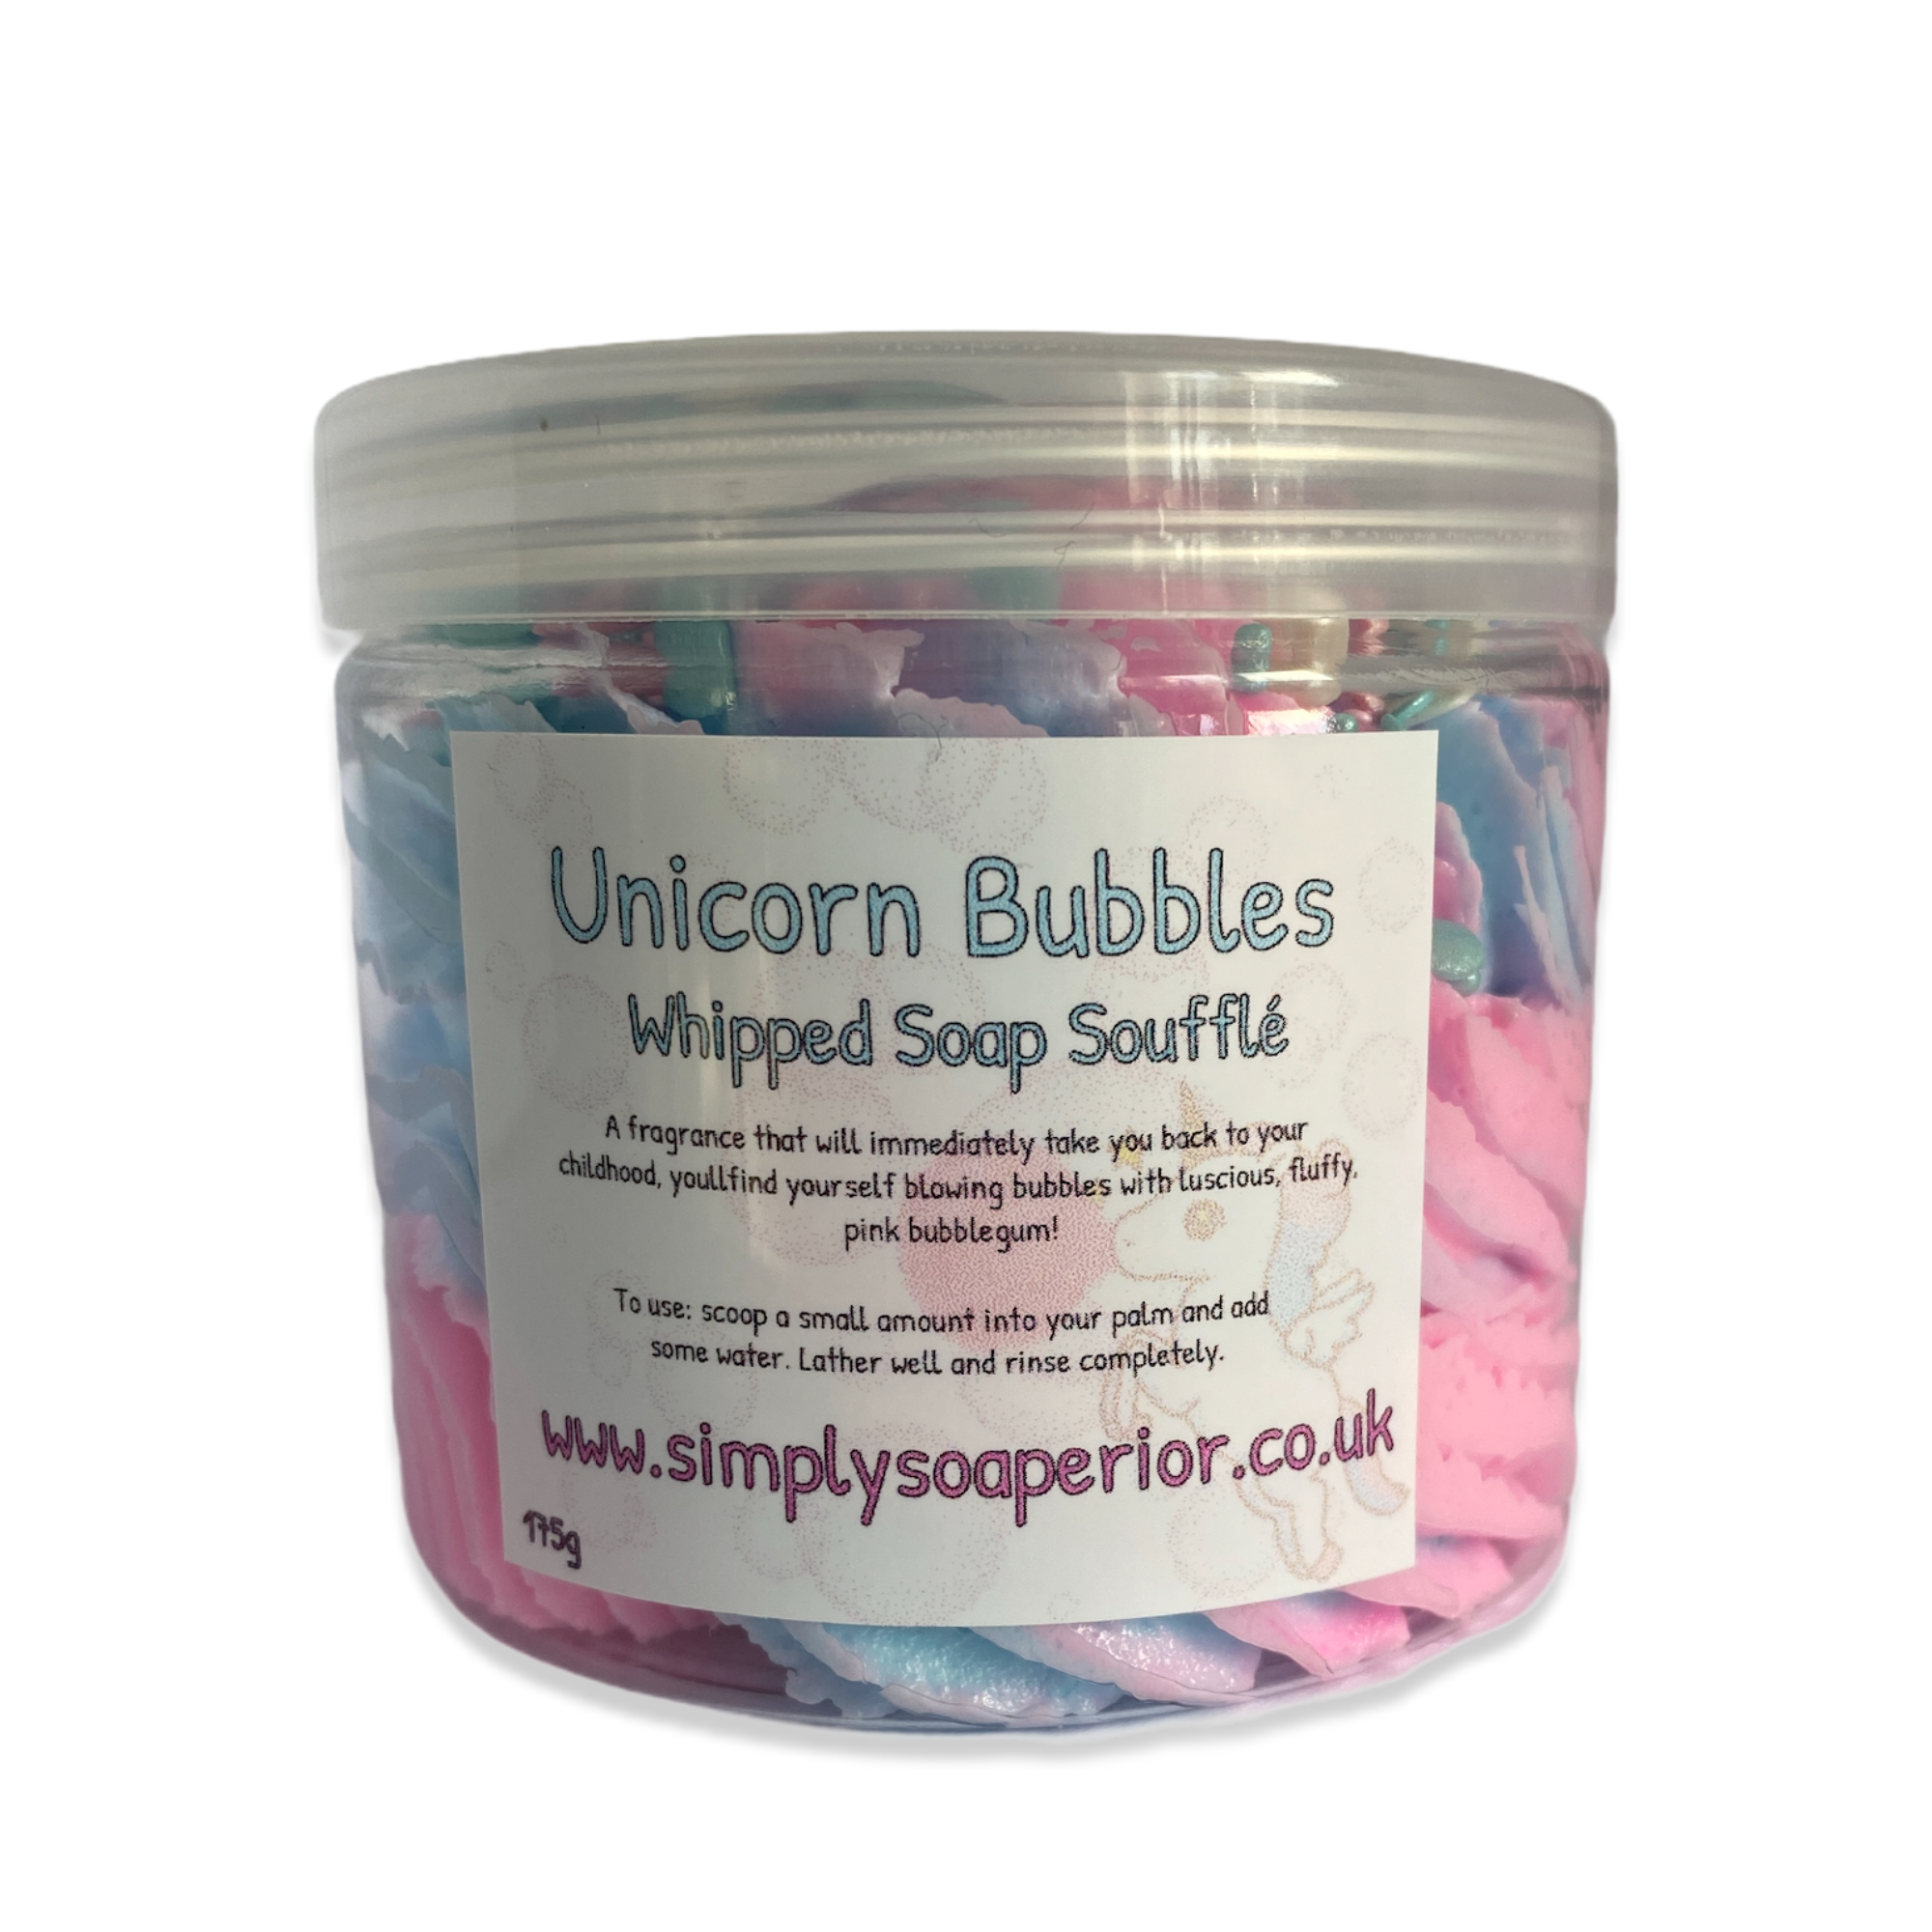 Unicorn Bubbles Whipped Soap 3